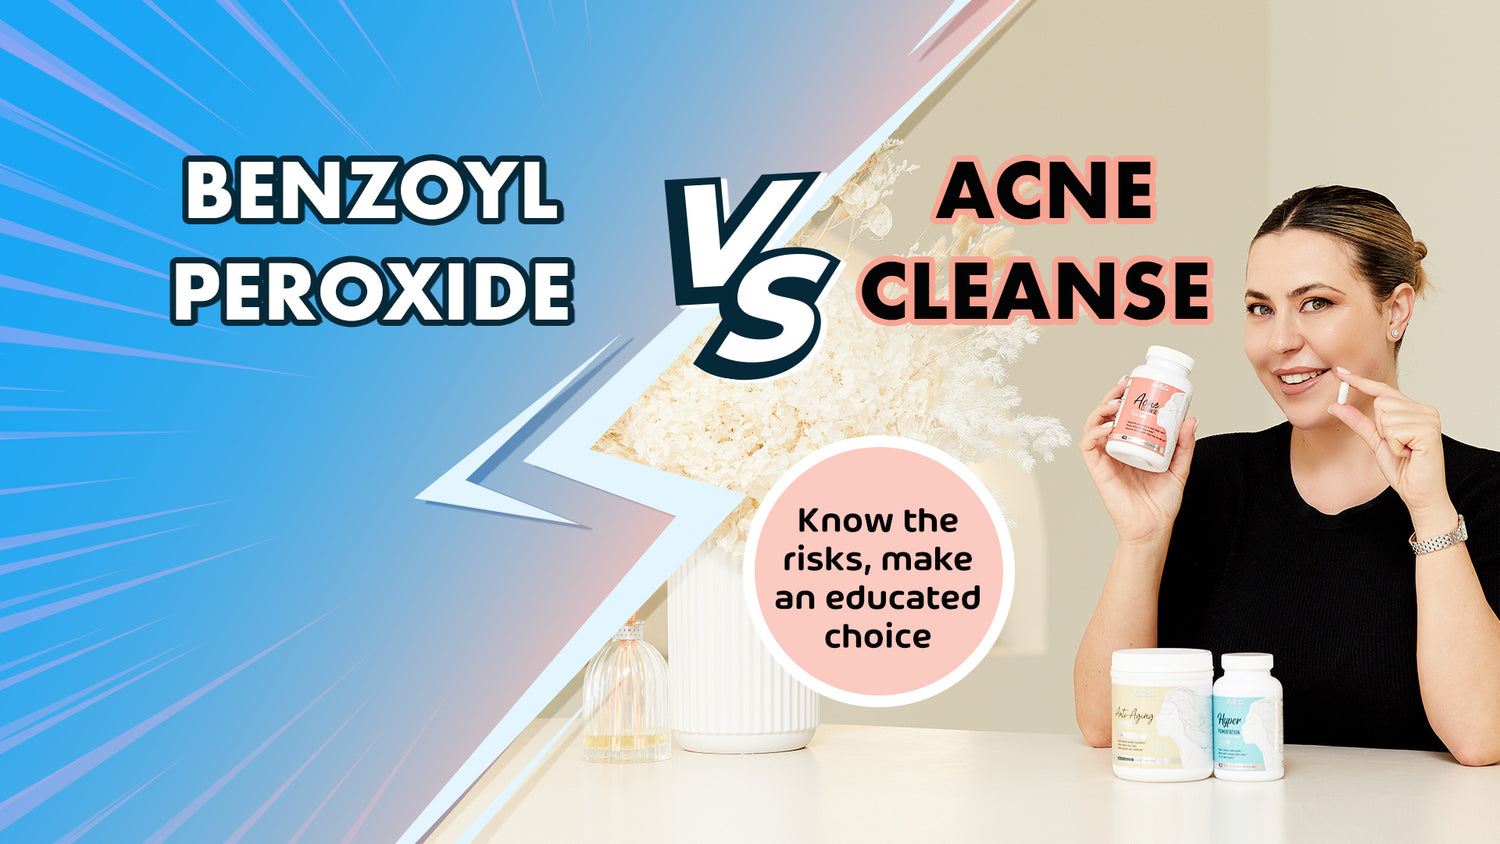 Acne Cleanse vs benzoyl peroxide